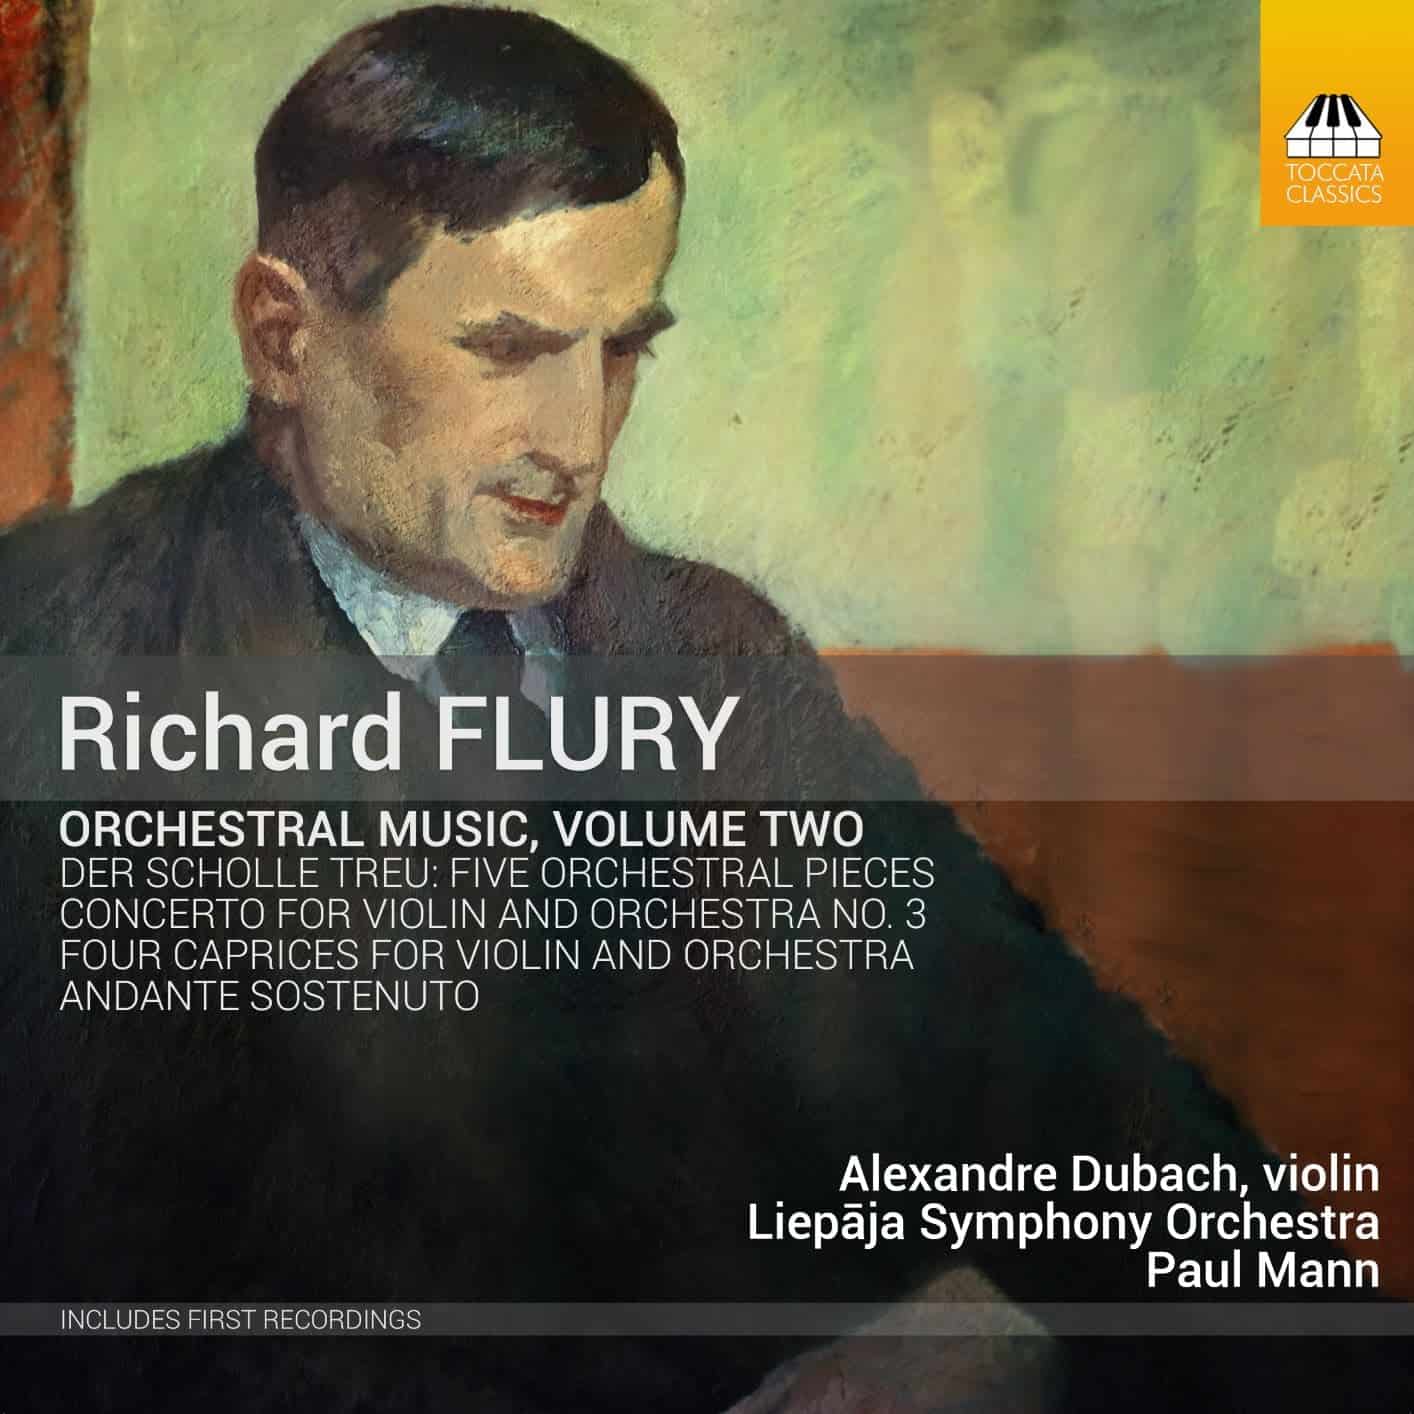 RICHARD FLURY: ORCHESTRAL MUSIC, VOLUME TWO